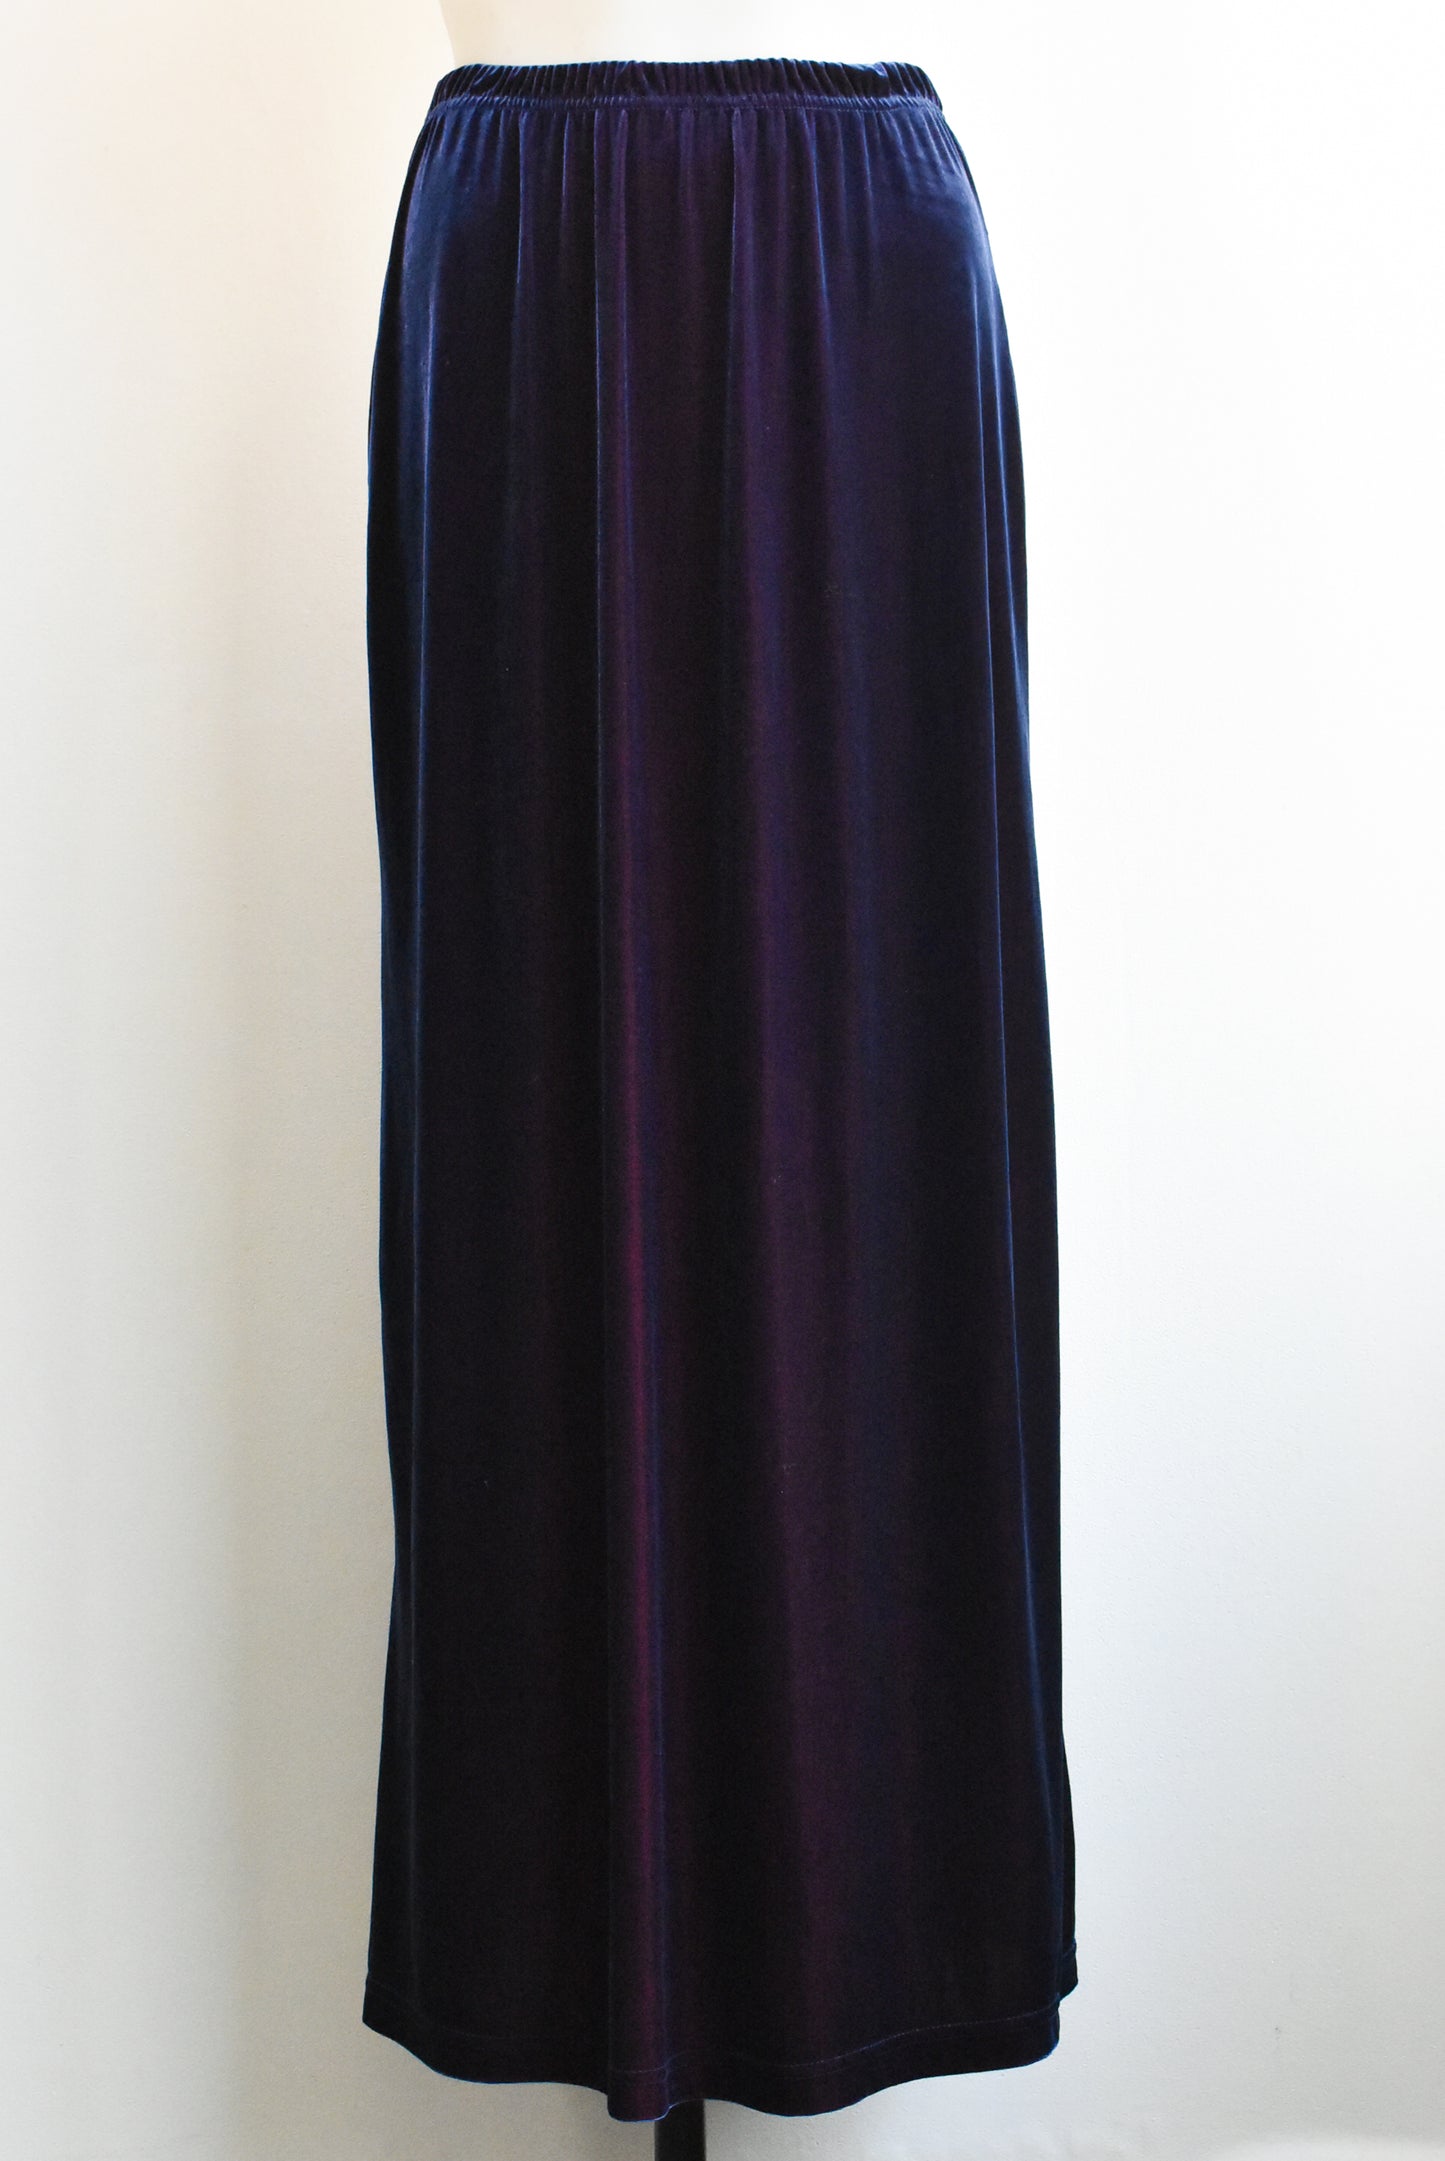 Hot Couture iridescent midnight blue velour skirt, size 14